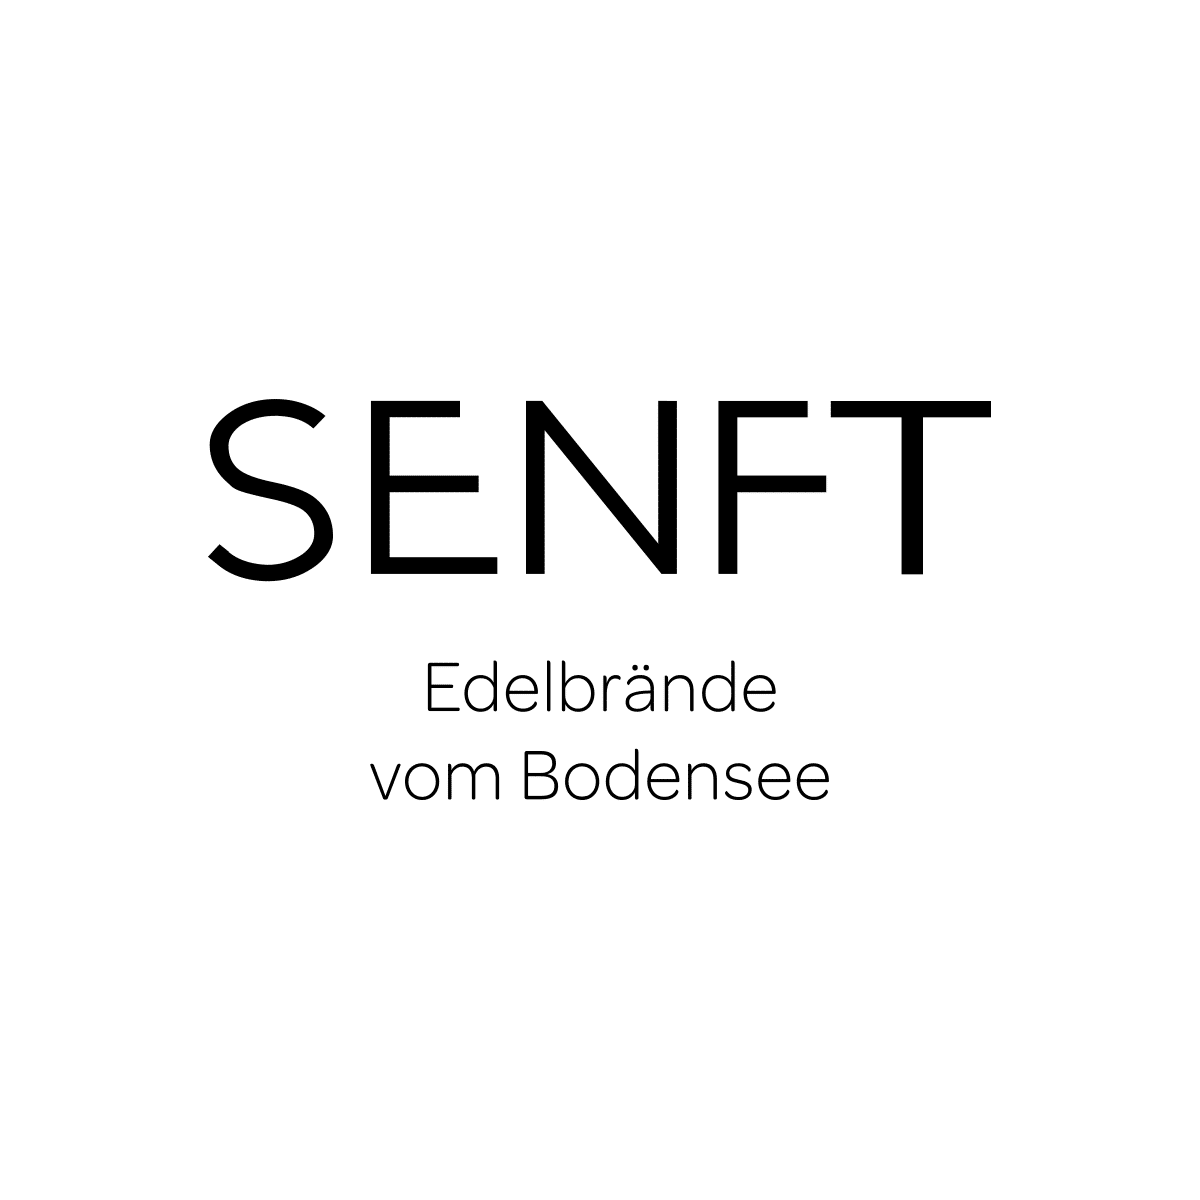 Edelbrände Senft Logo